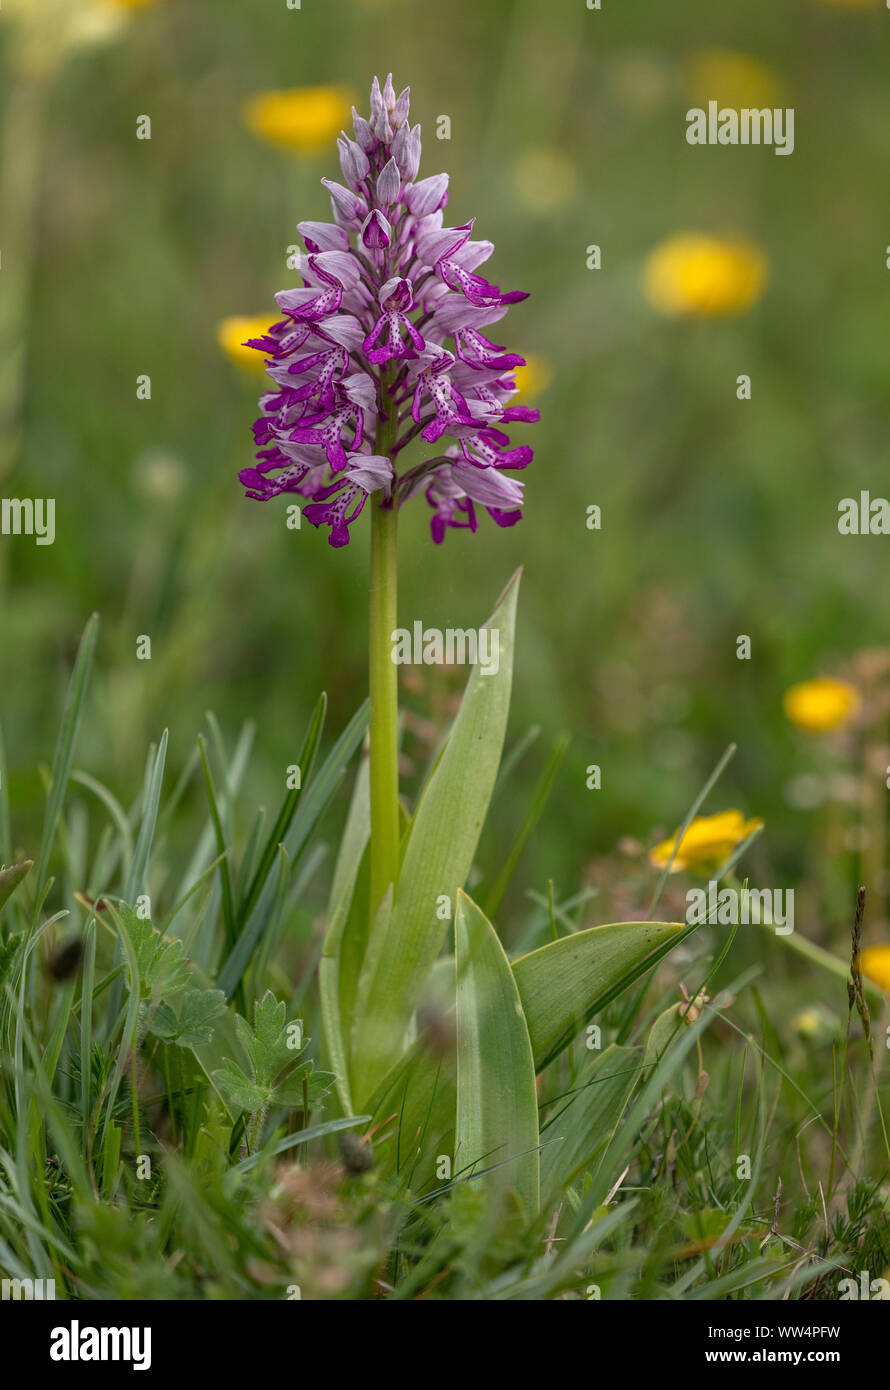 Helm-knabenkraut, Orchis militaris, in der Blume in Kalkmagerrasen. UK Rarität. Stockfoto